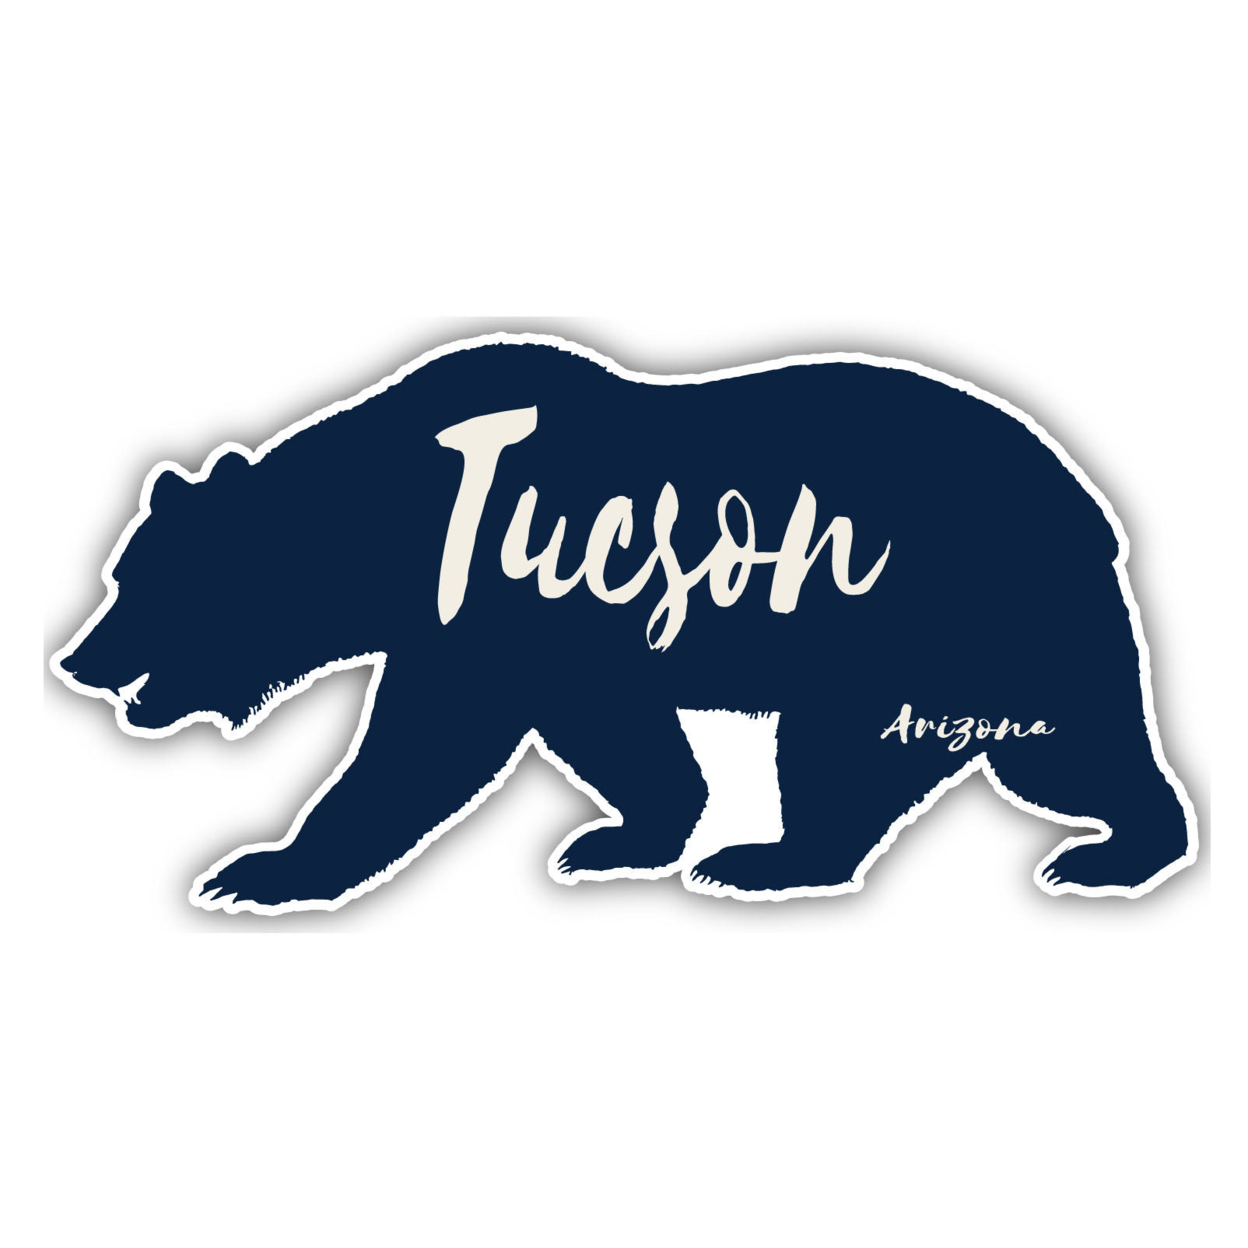 Tucson Arizona Souvenir Decorative Stickers (Choose Theme And Size) - Single Unit, 4-Inch, Bear